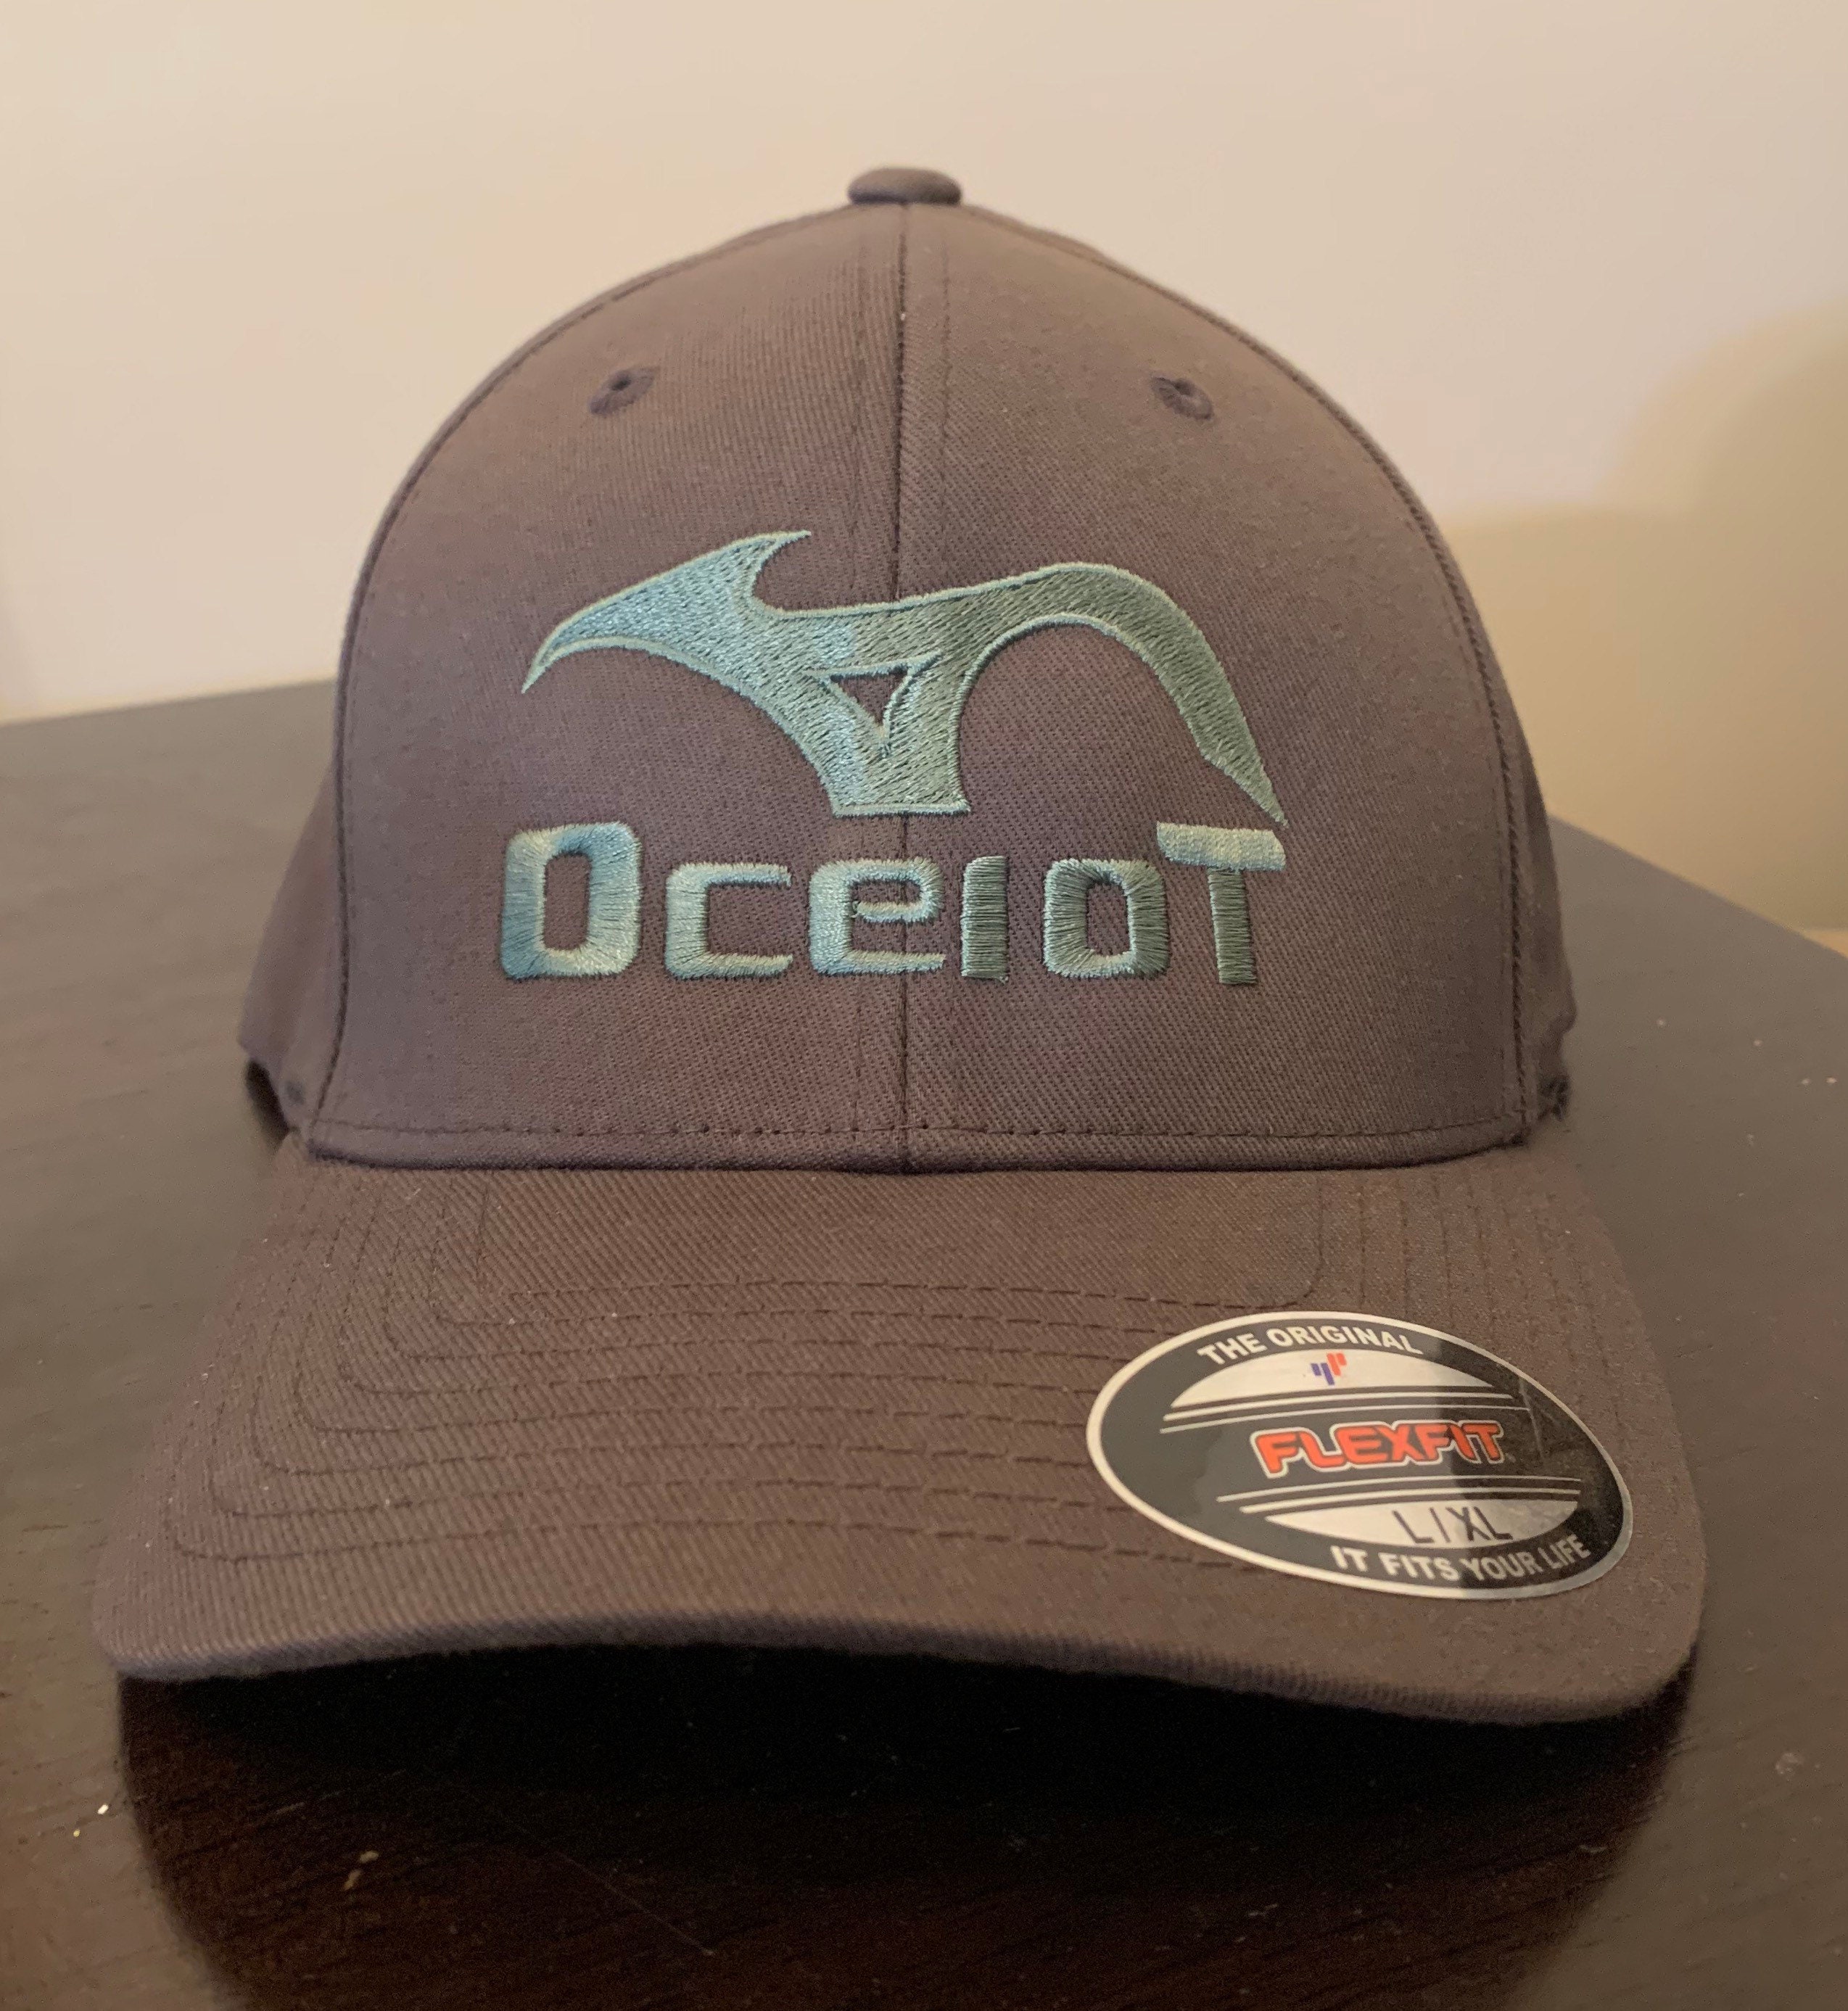 Ocelot Flexfit Hats - Etsy